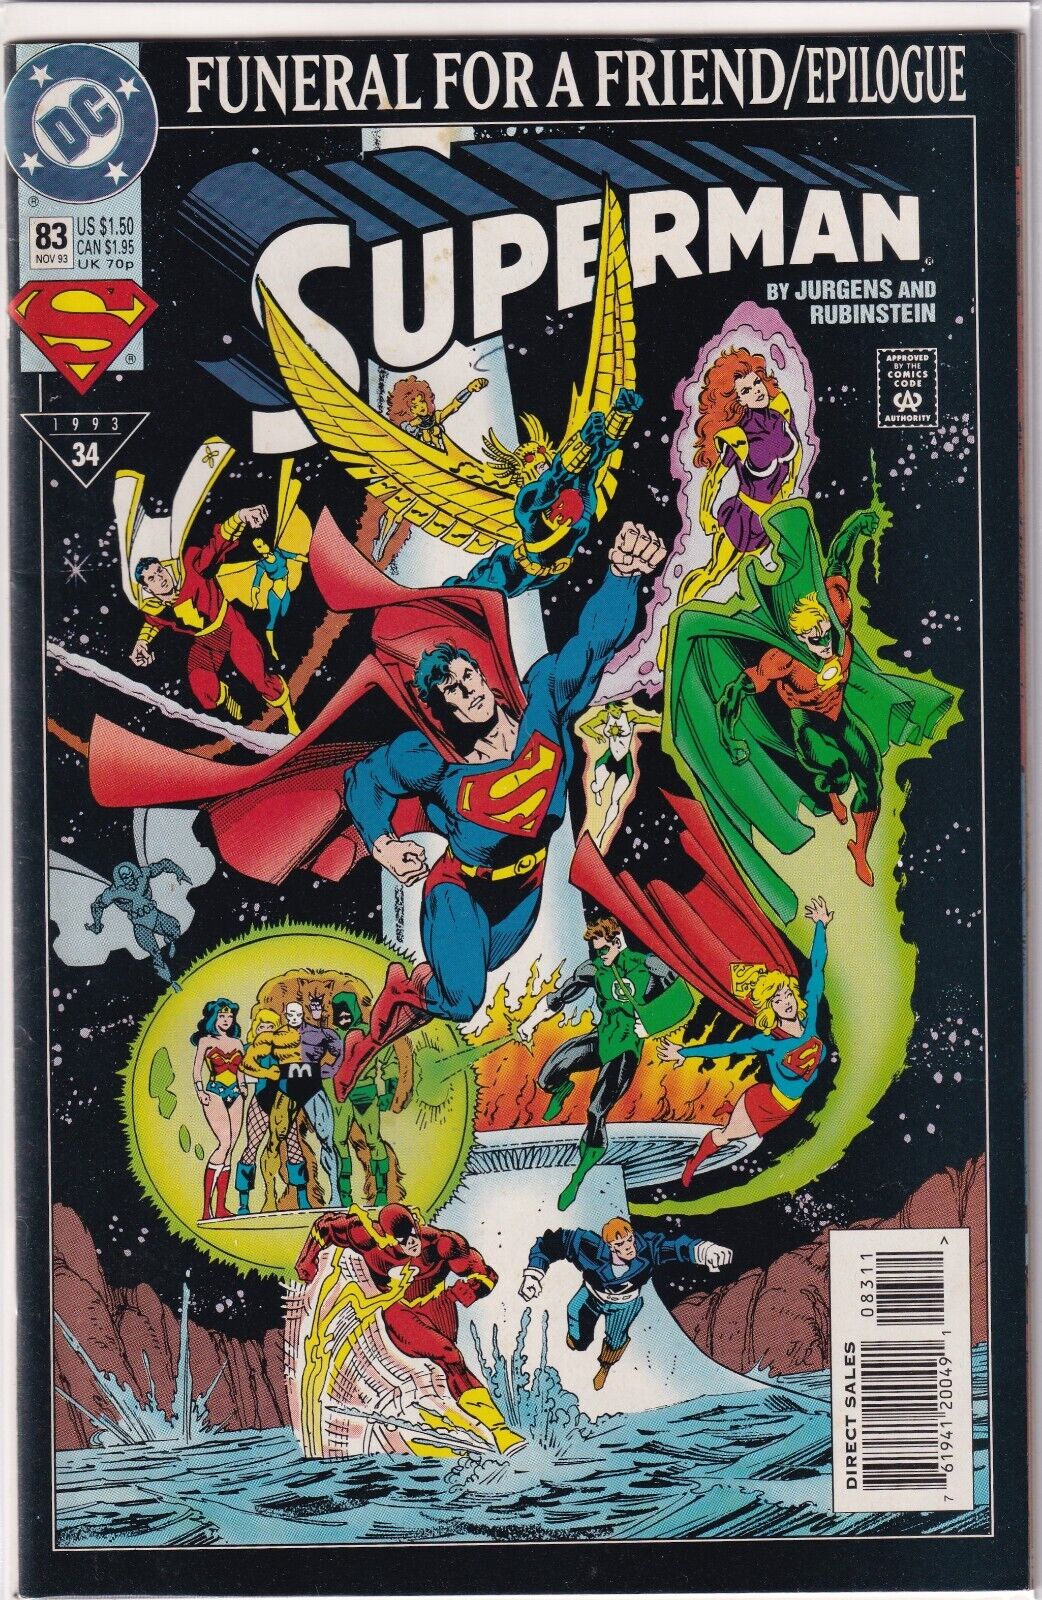 Superman #83 Funeral for a Friend/Epilogue (DC Comics, 1993)